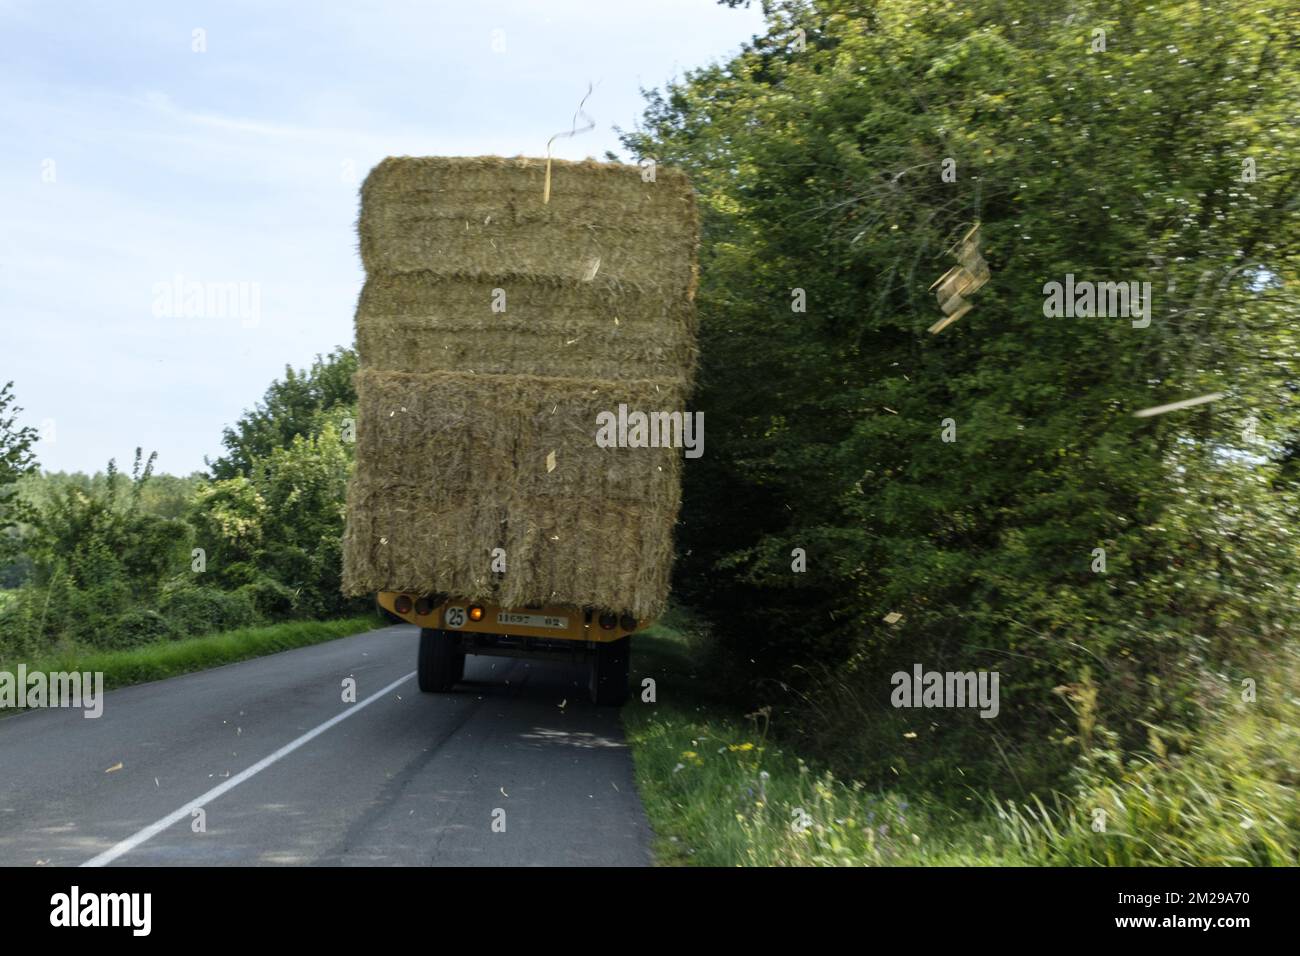 Traktor beladen mit Strohballen auf einer Landstraße | Tracteur Charge de bottes de paille sur une Route de Campagne 29/08/2017 Stockfoto